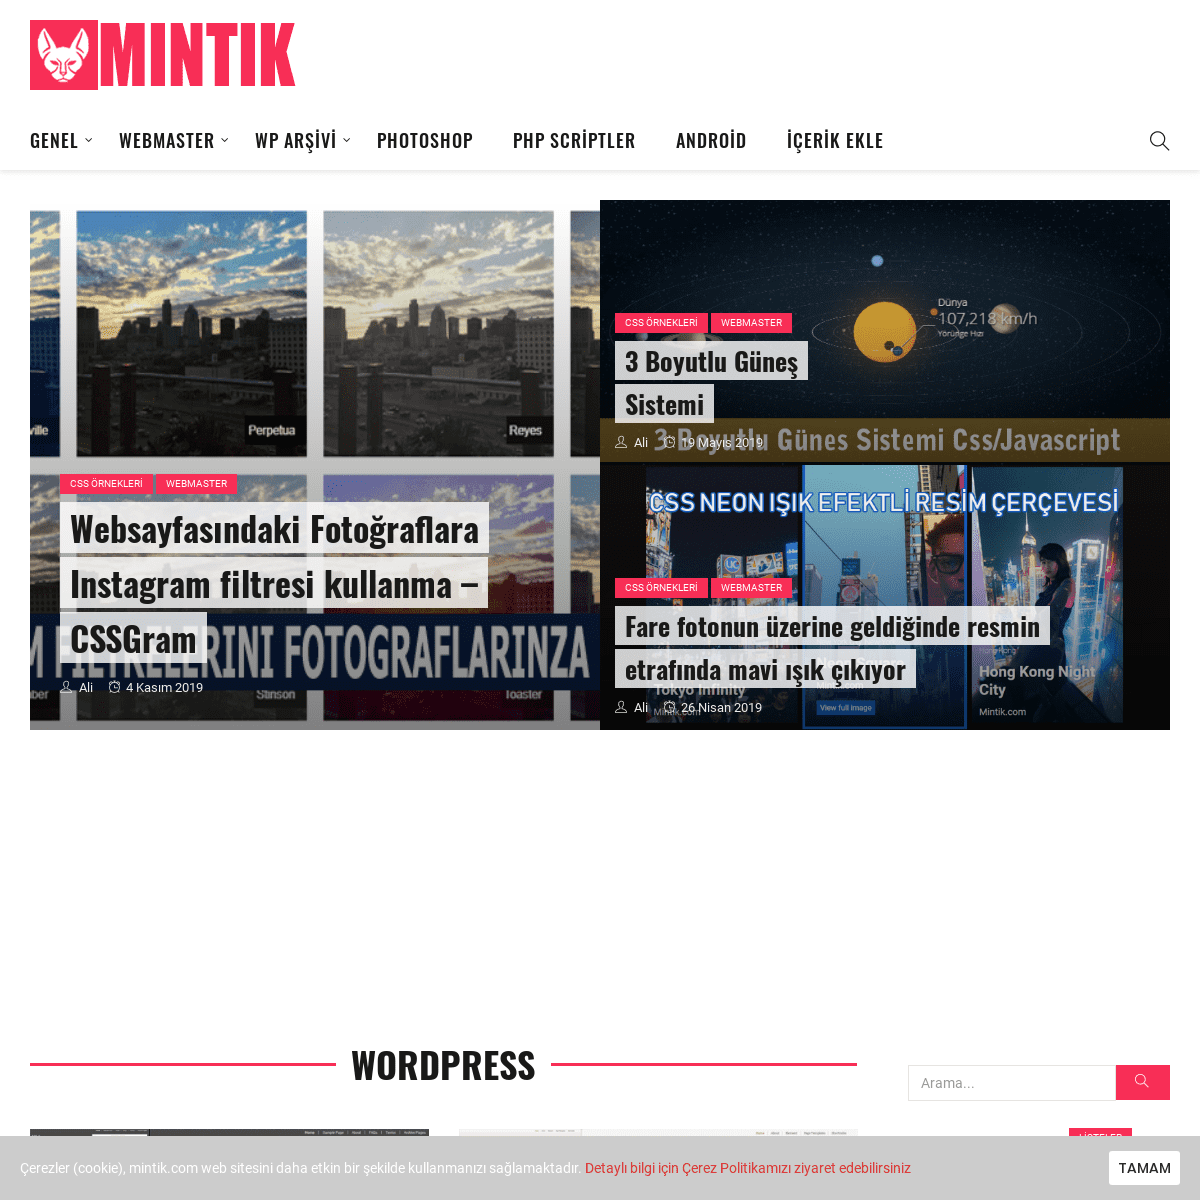 A complete backup of mintik.com